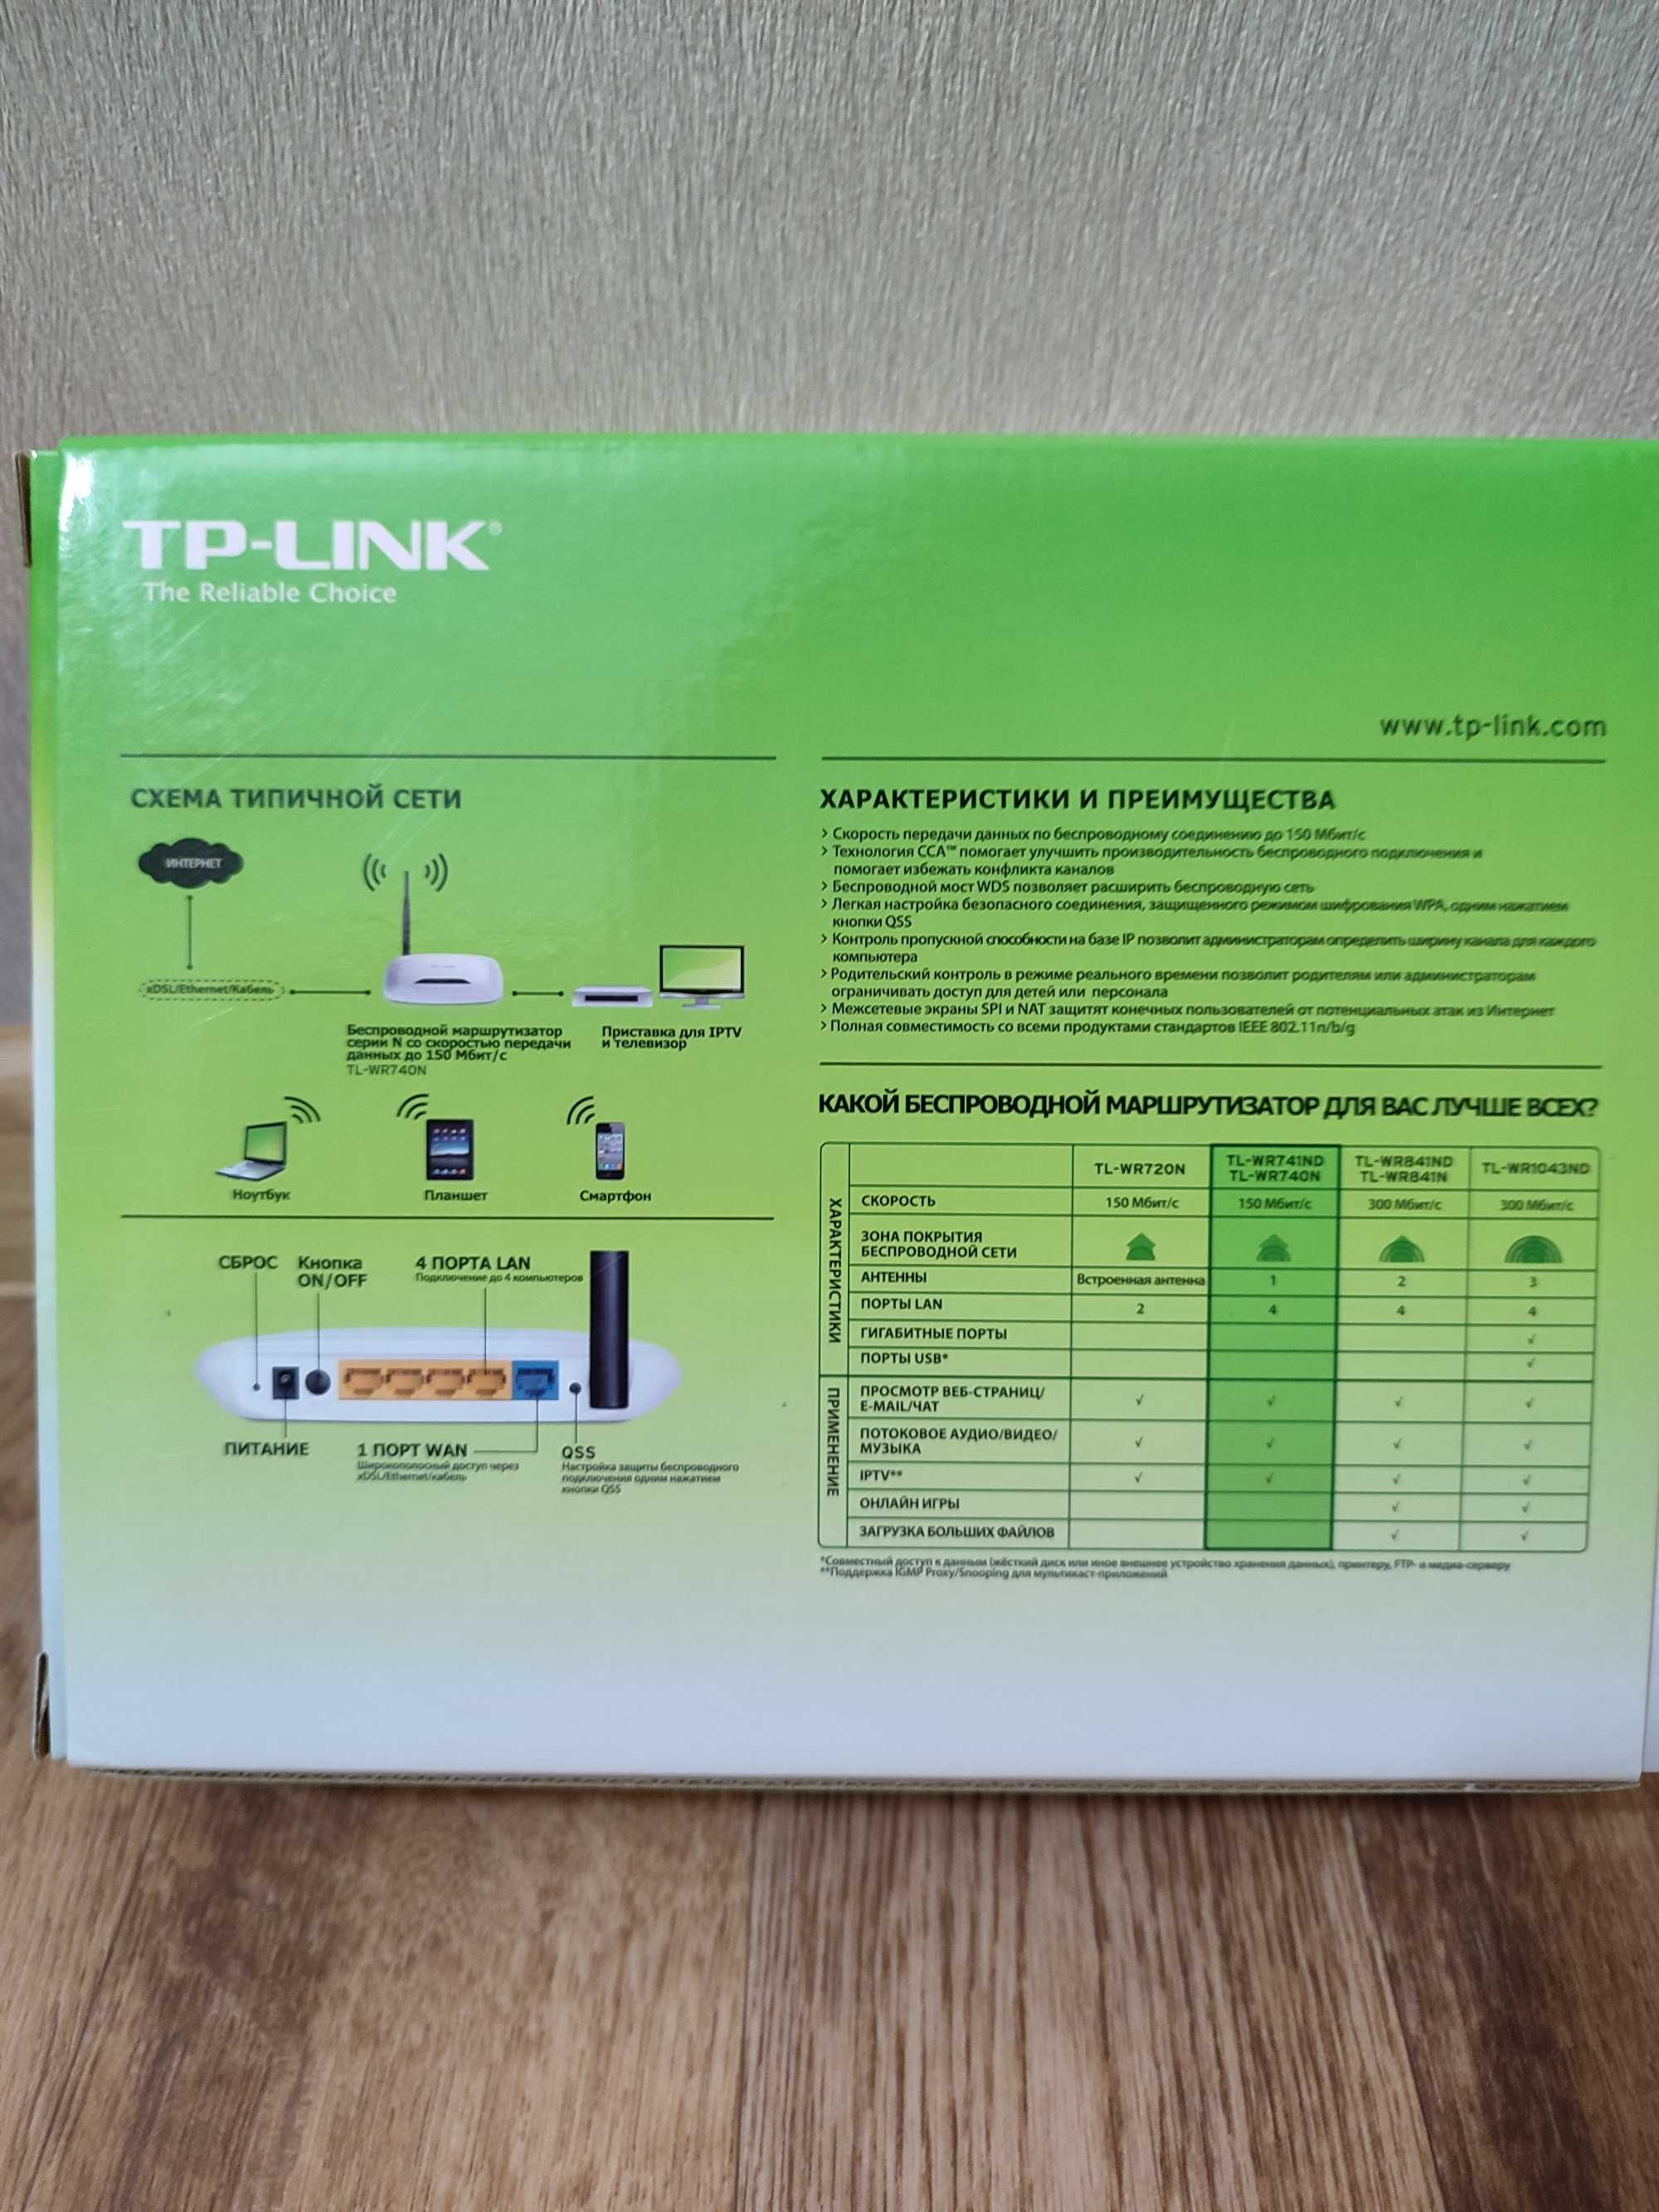 Модем TP-LINK (беспроводной маршрутизатор)